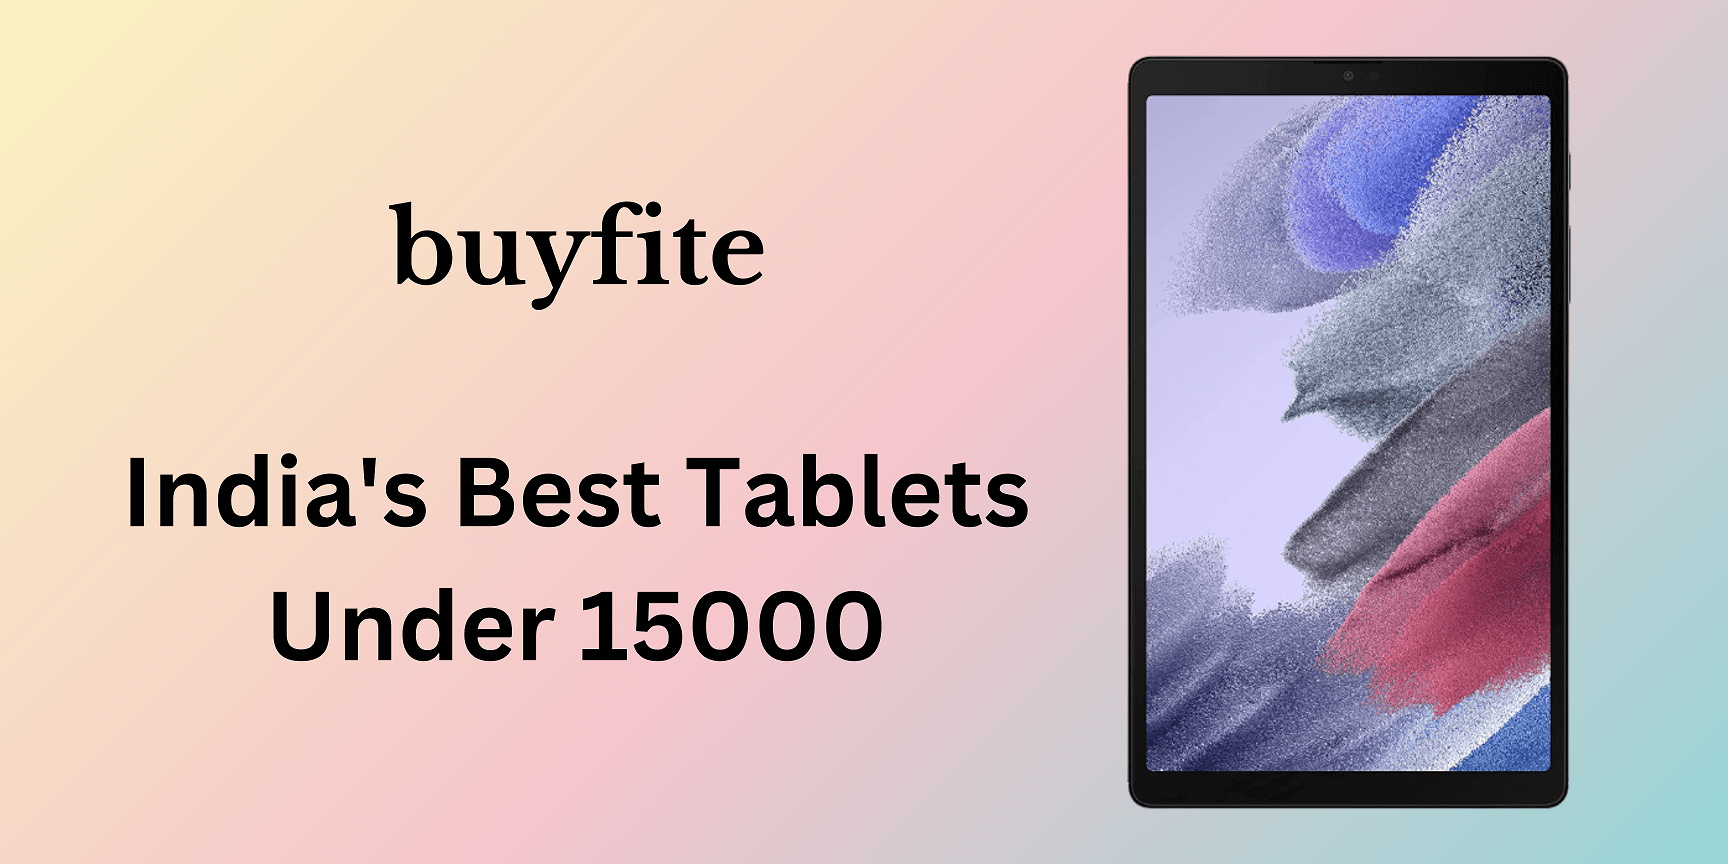 India's Best Tablets Under 15000 - buyfite